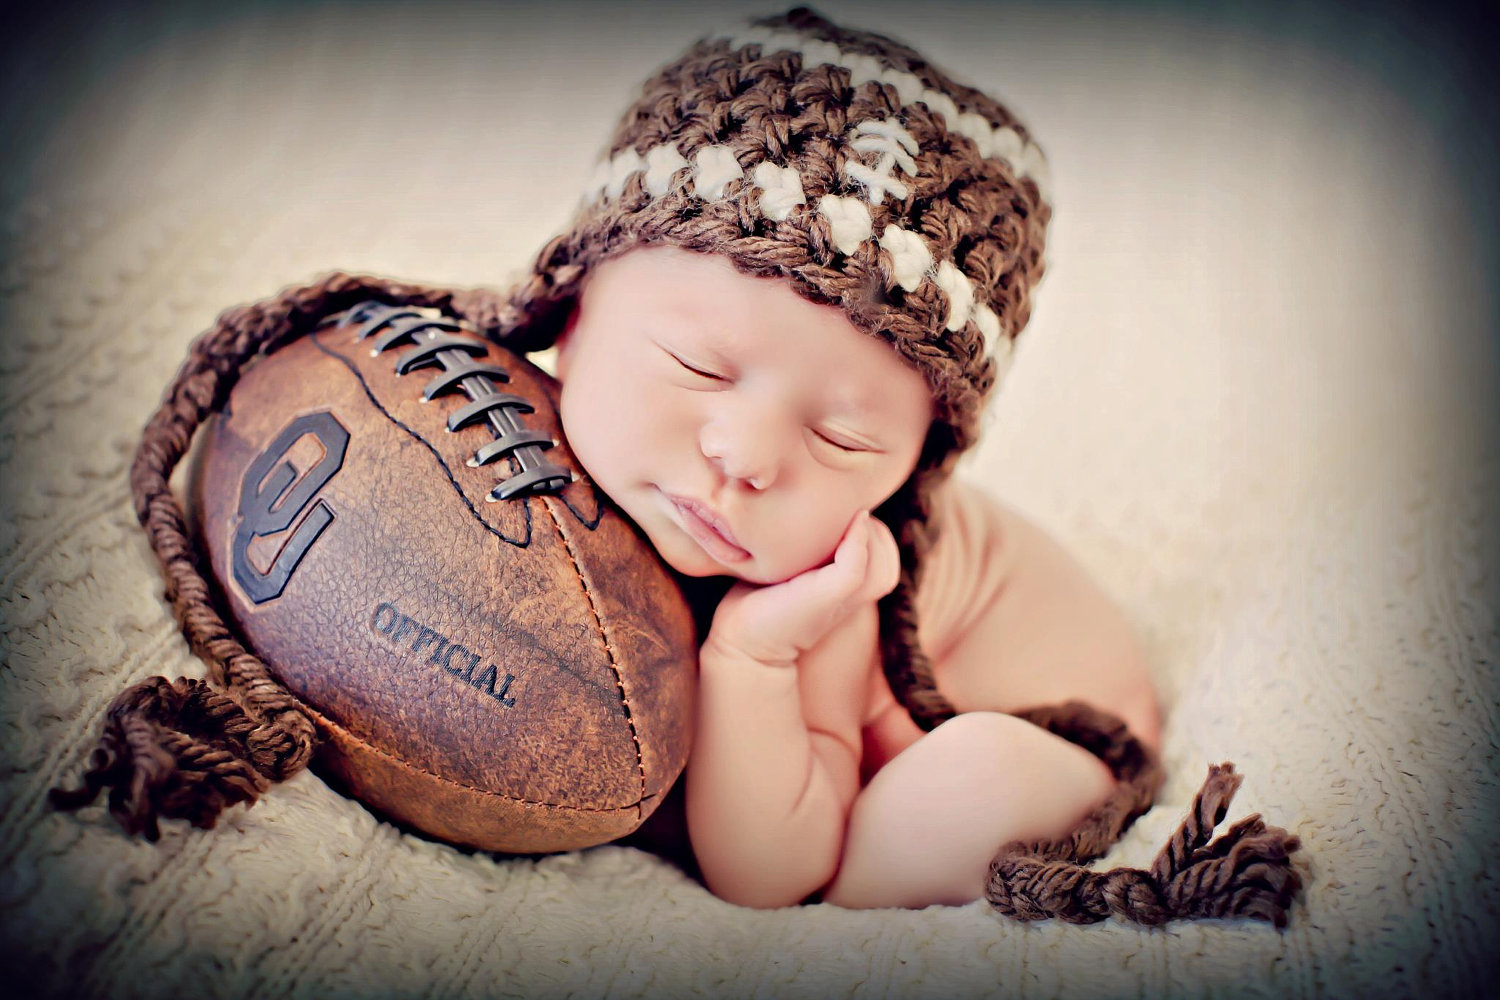 Newborn Baby Boy Football Photography